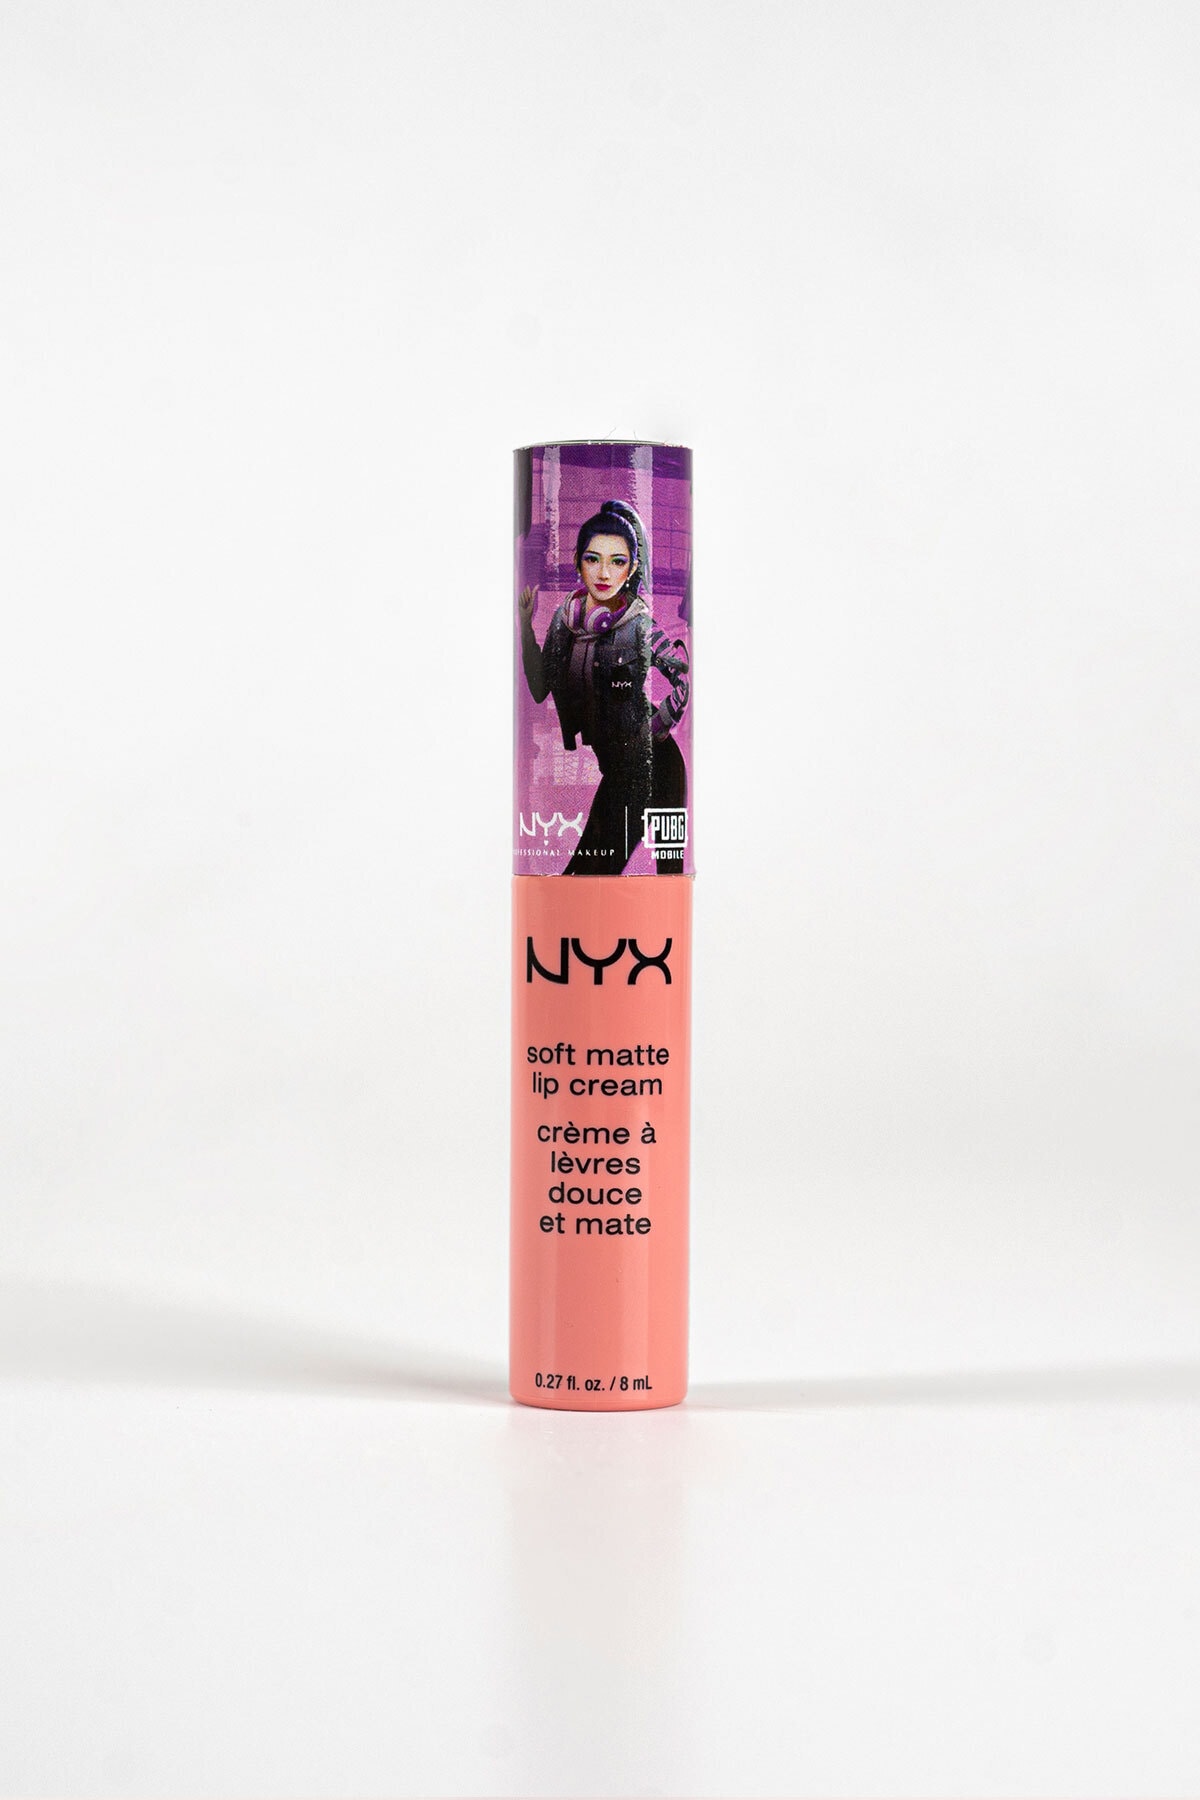 NYX Professional Makeup Pubgm Soft Matte Lip Cream Tokyo - Likit Mat Ruj